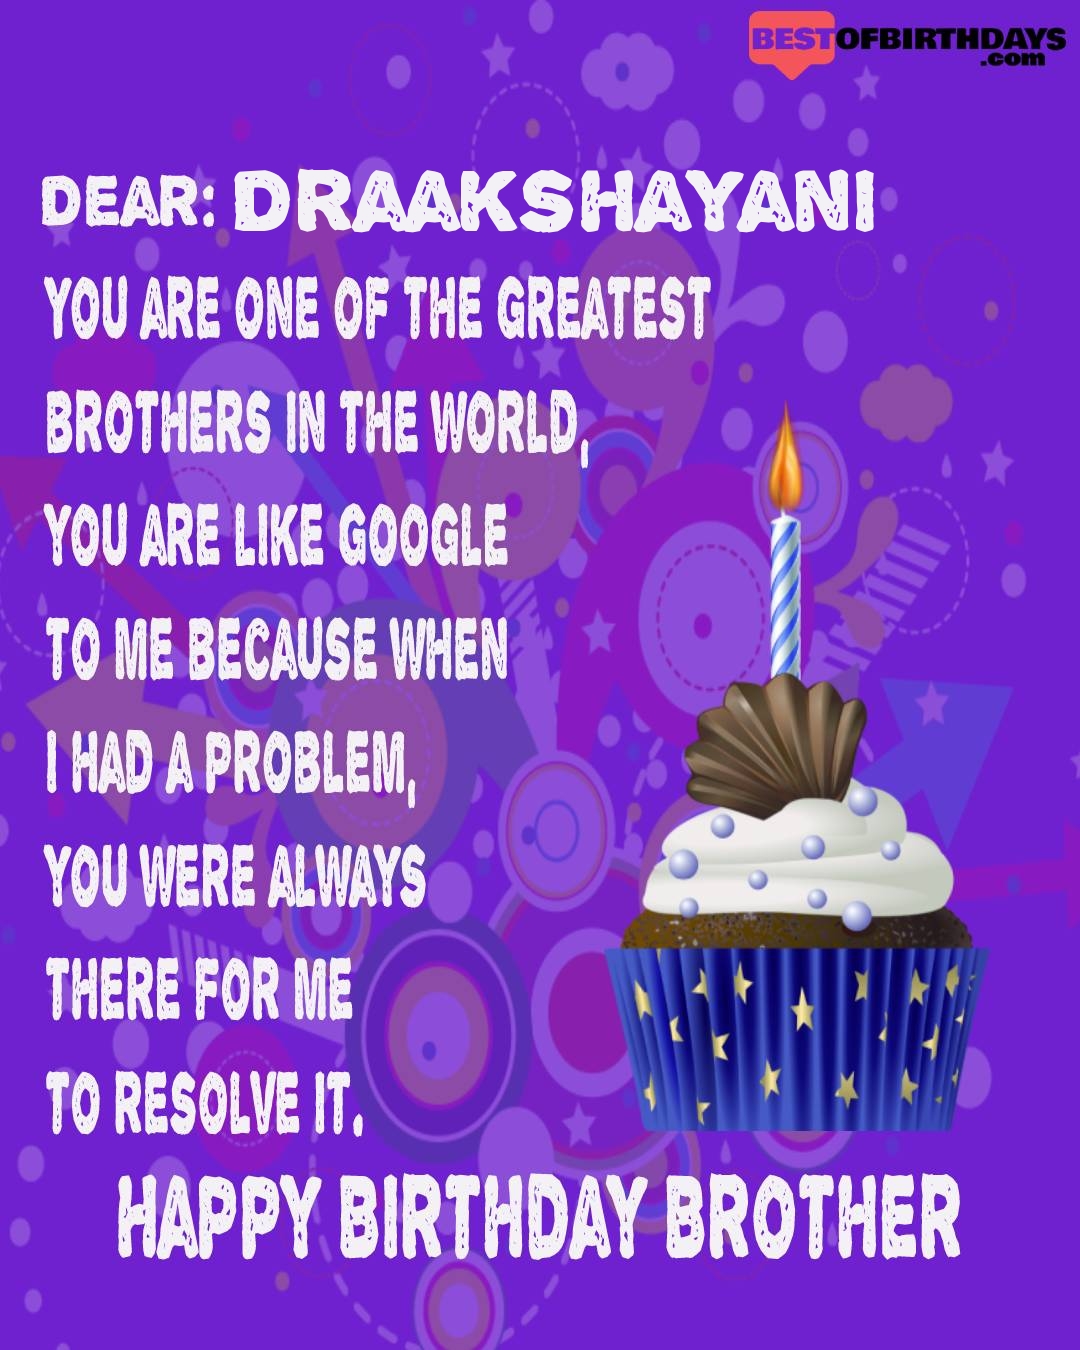 Happy birthday draakshayani bhai brother bro